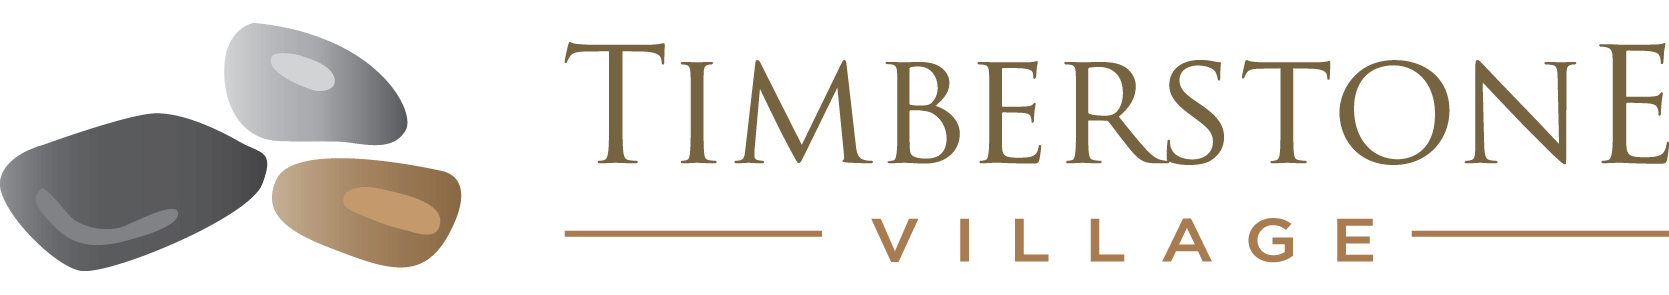 Timberstone Village logo